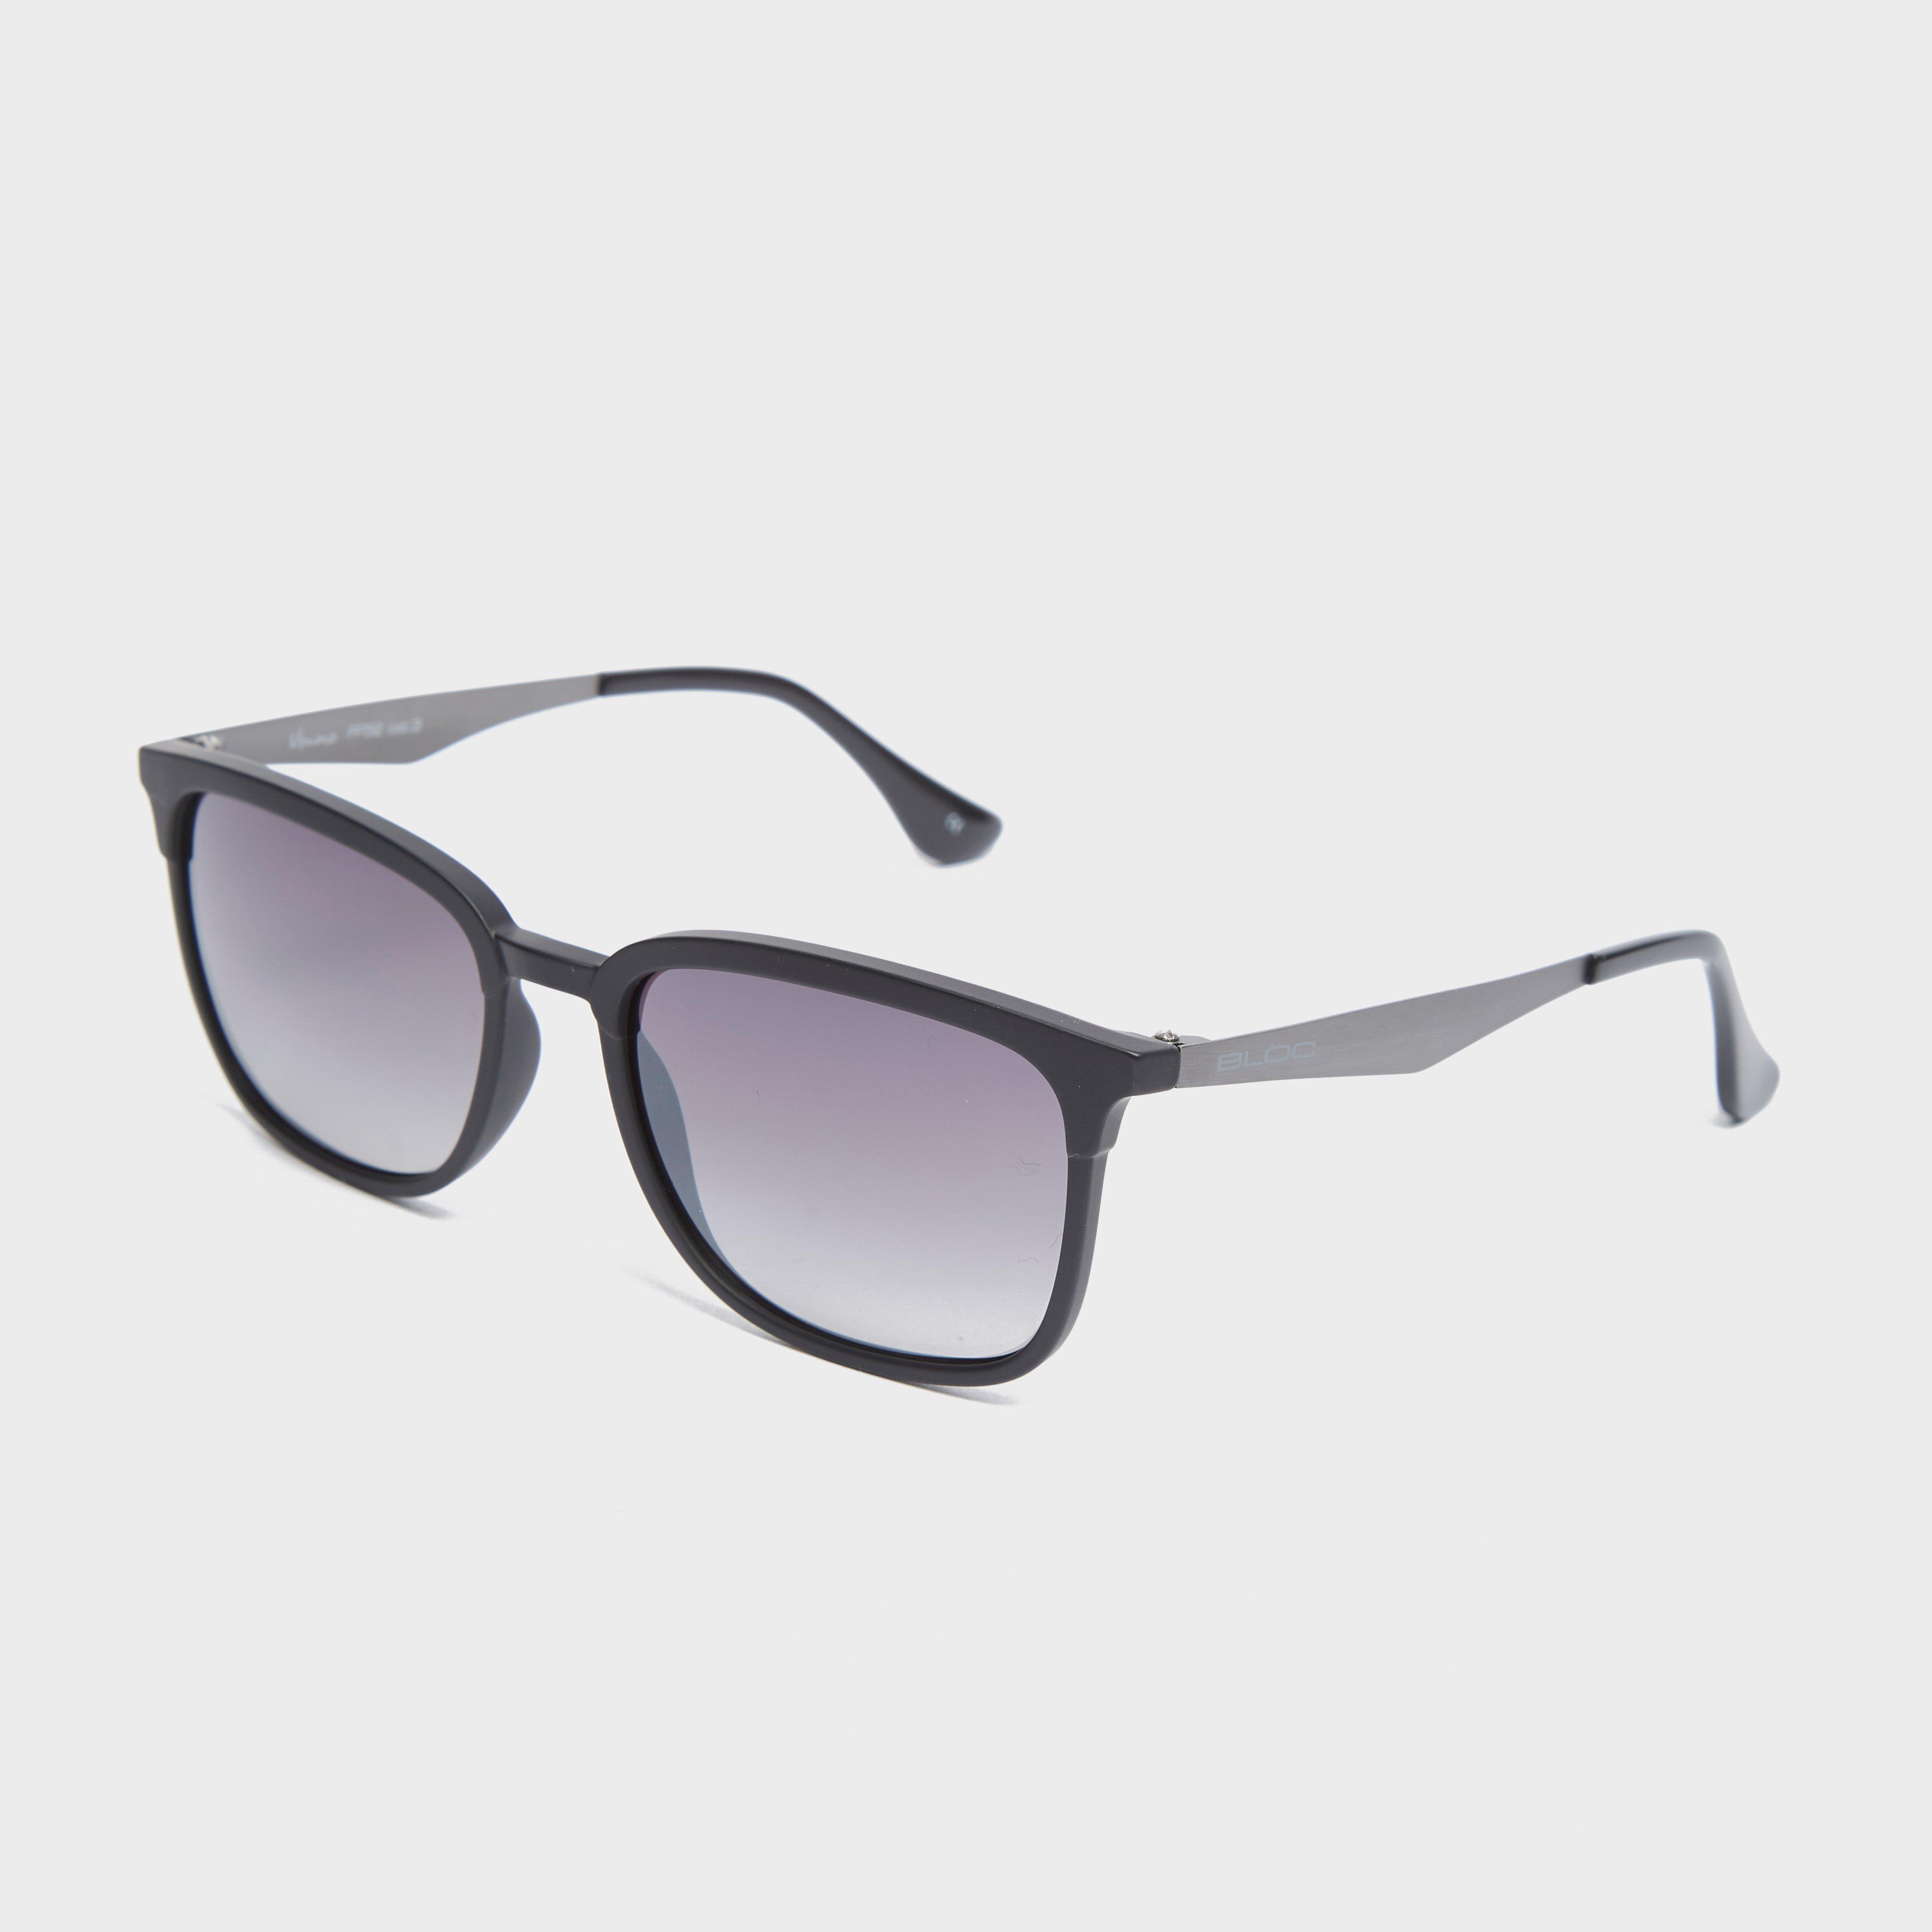 Bloc Jasmin FF1 Sunglasses Review